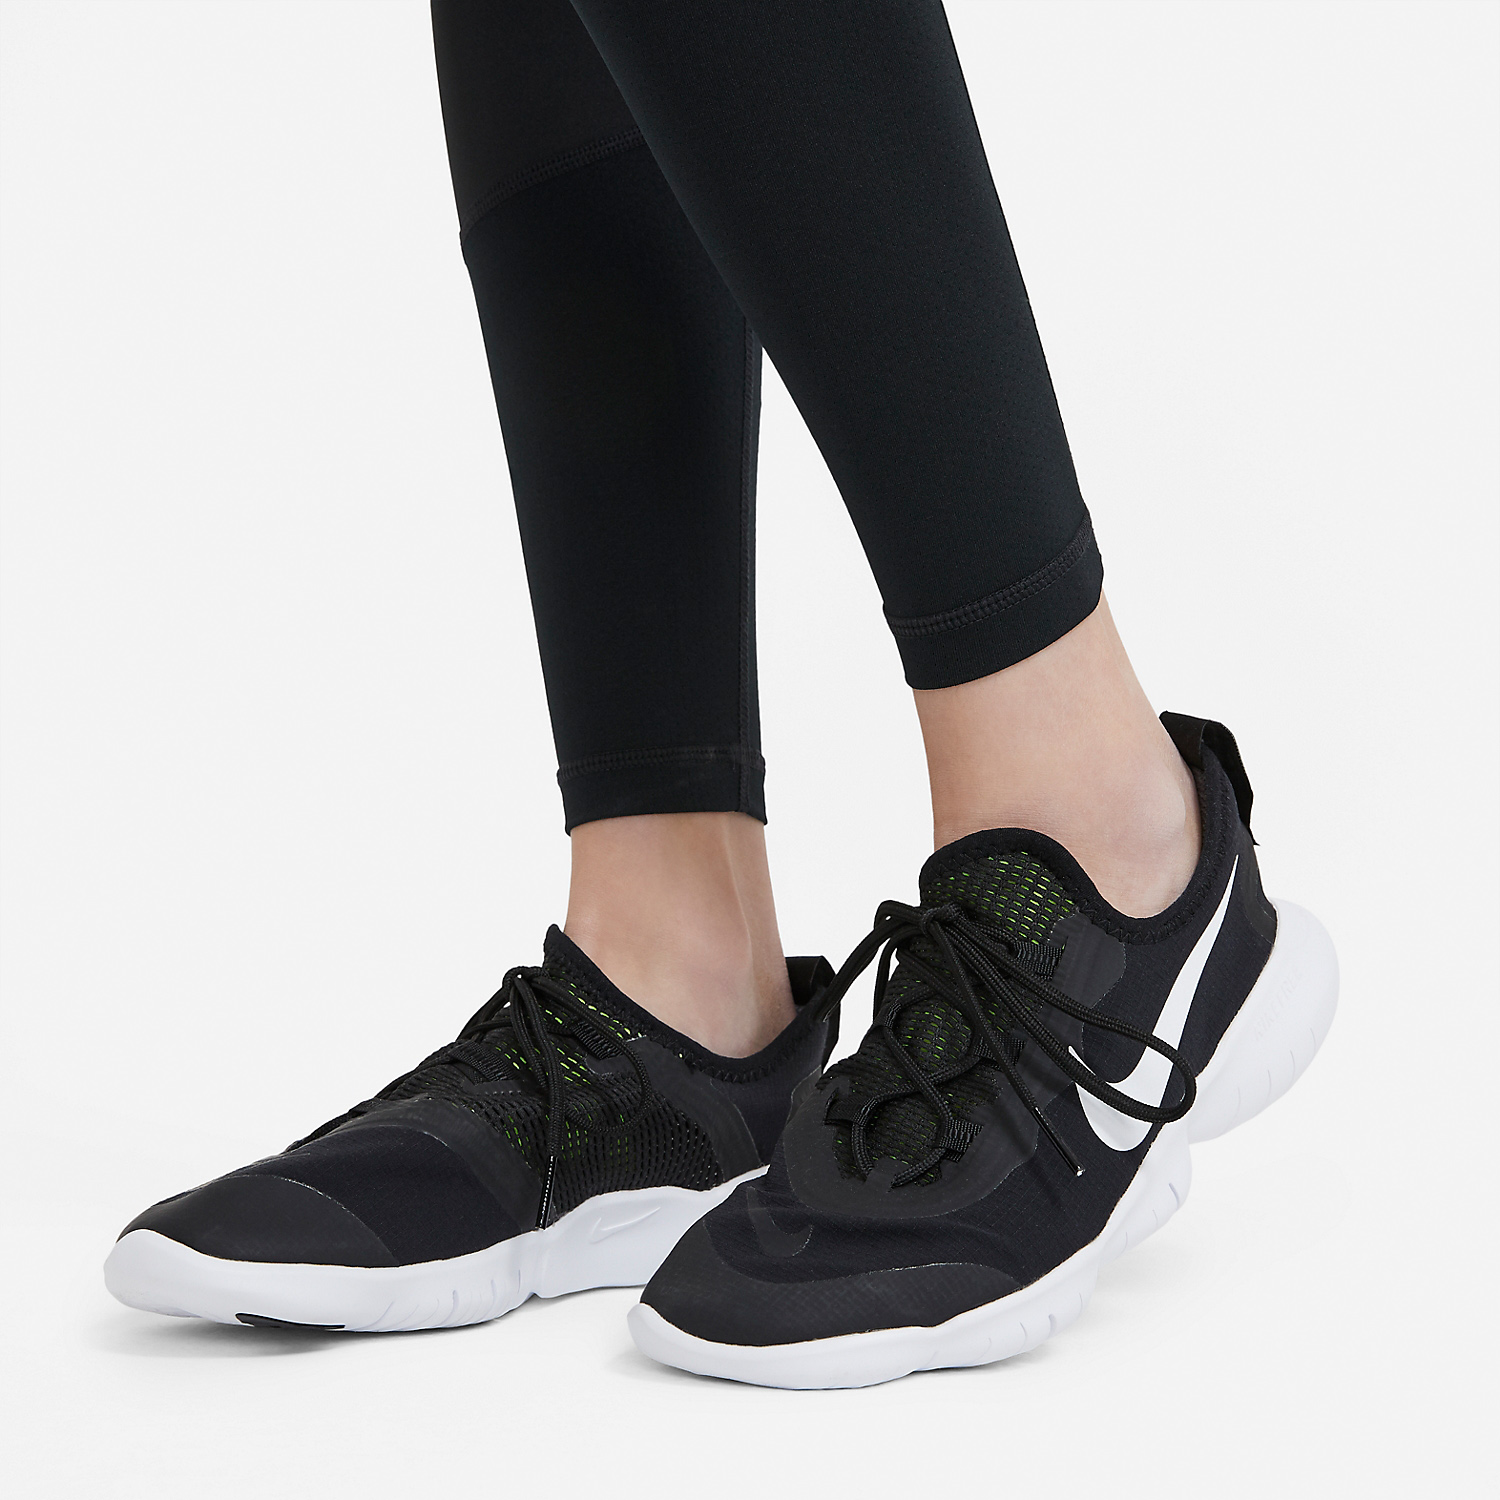 Nike Pro Tights Bambina - Black/White